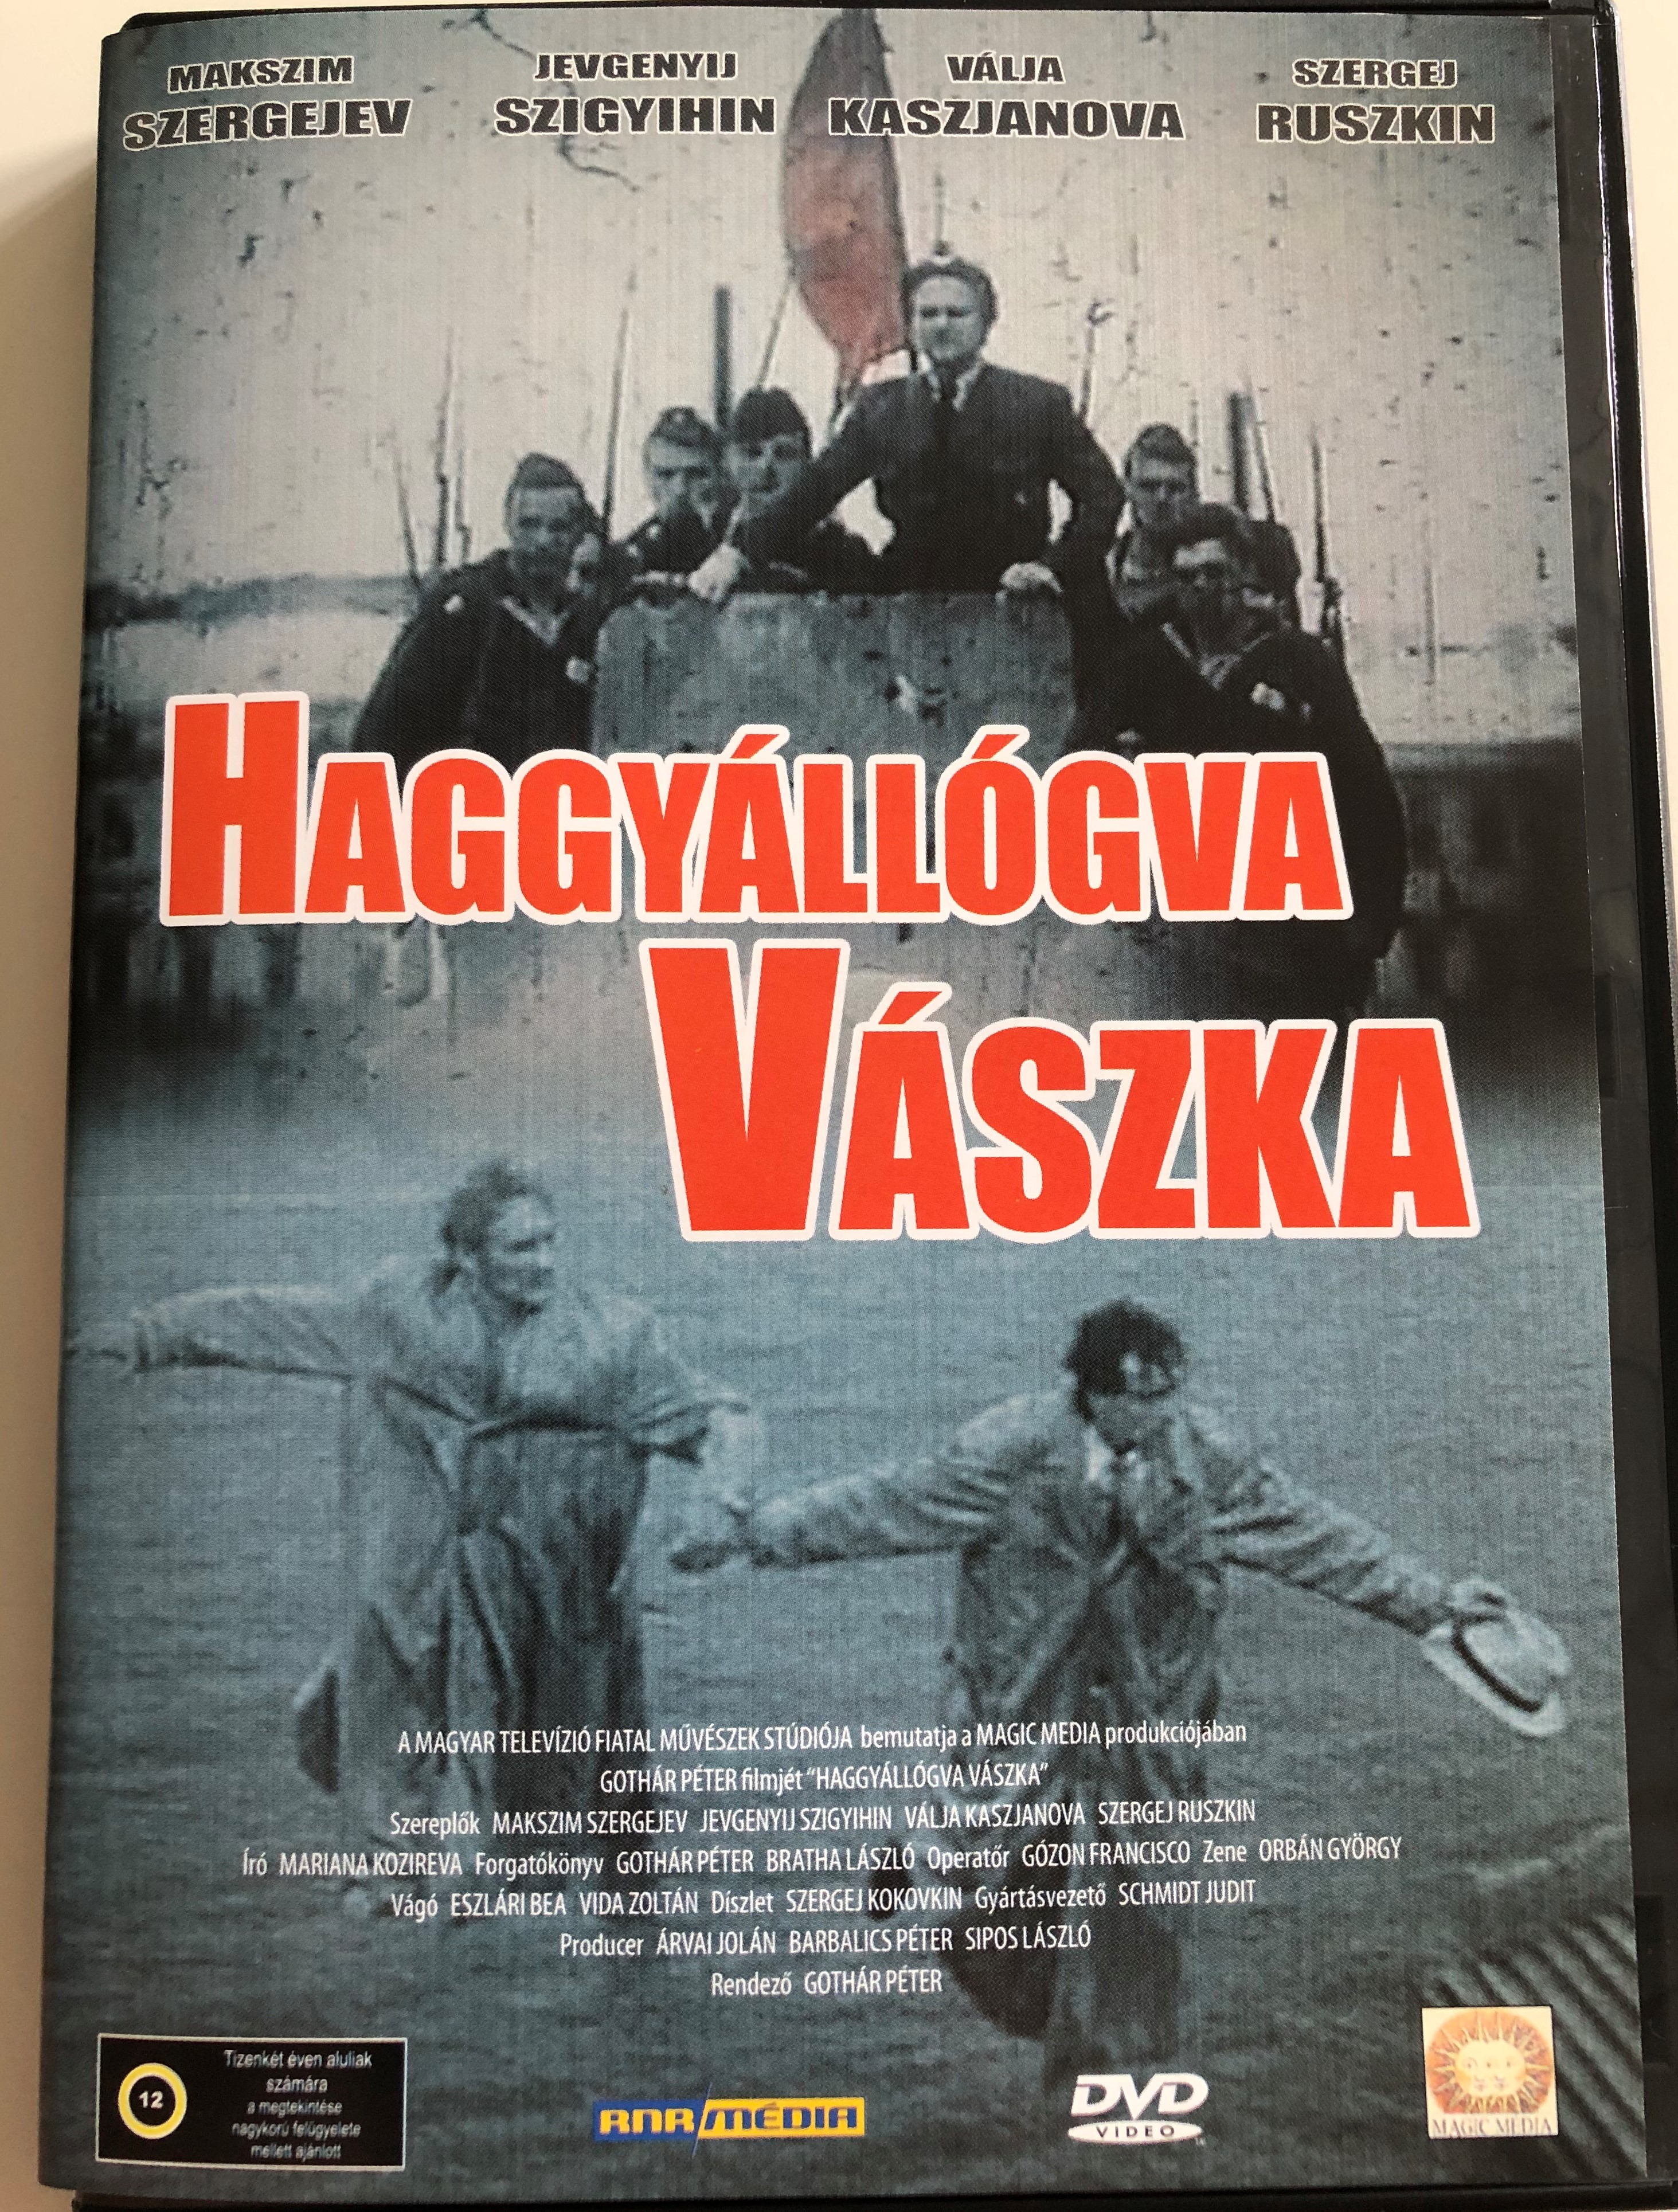 vaska-easoff-dvd-1996-haggy-ll-gva-v-szka-directed-by-p-ter-goth-r-starring-maksim-sergeyev-1-.jpg